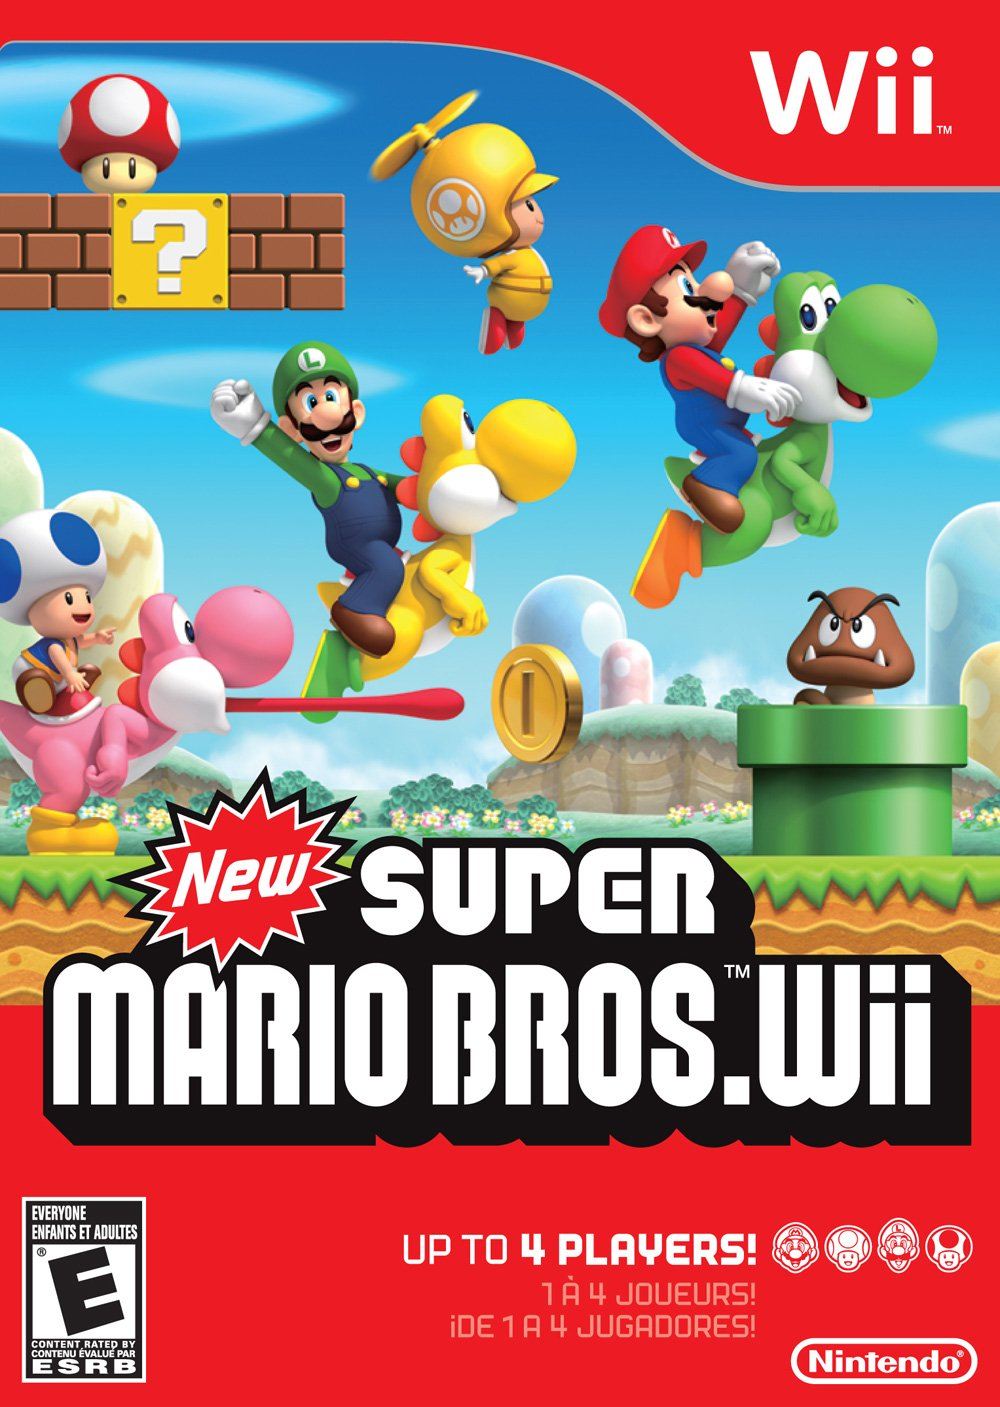 Super Mario Odyssey Nintendo Store 2017 New York NY Poster Promo Exclusive!  Rare 